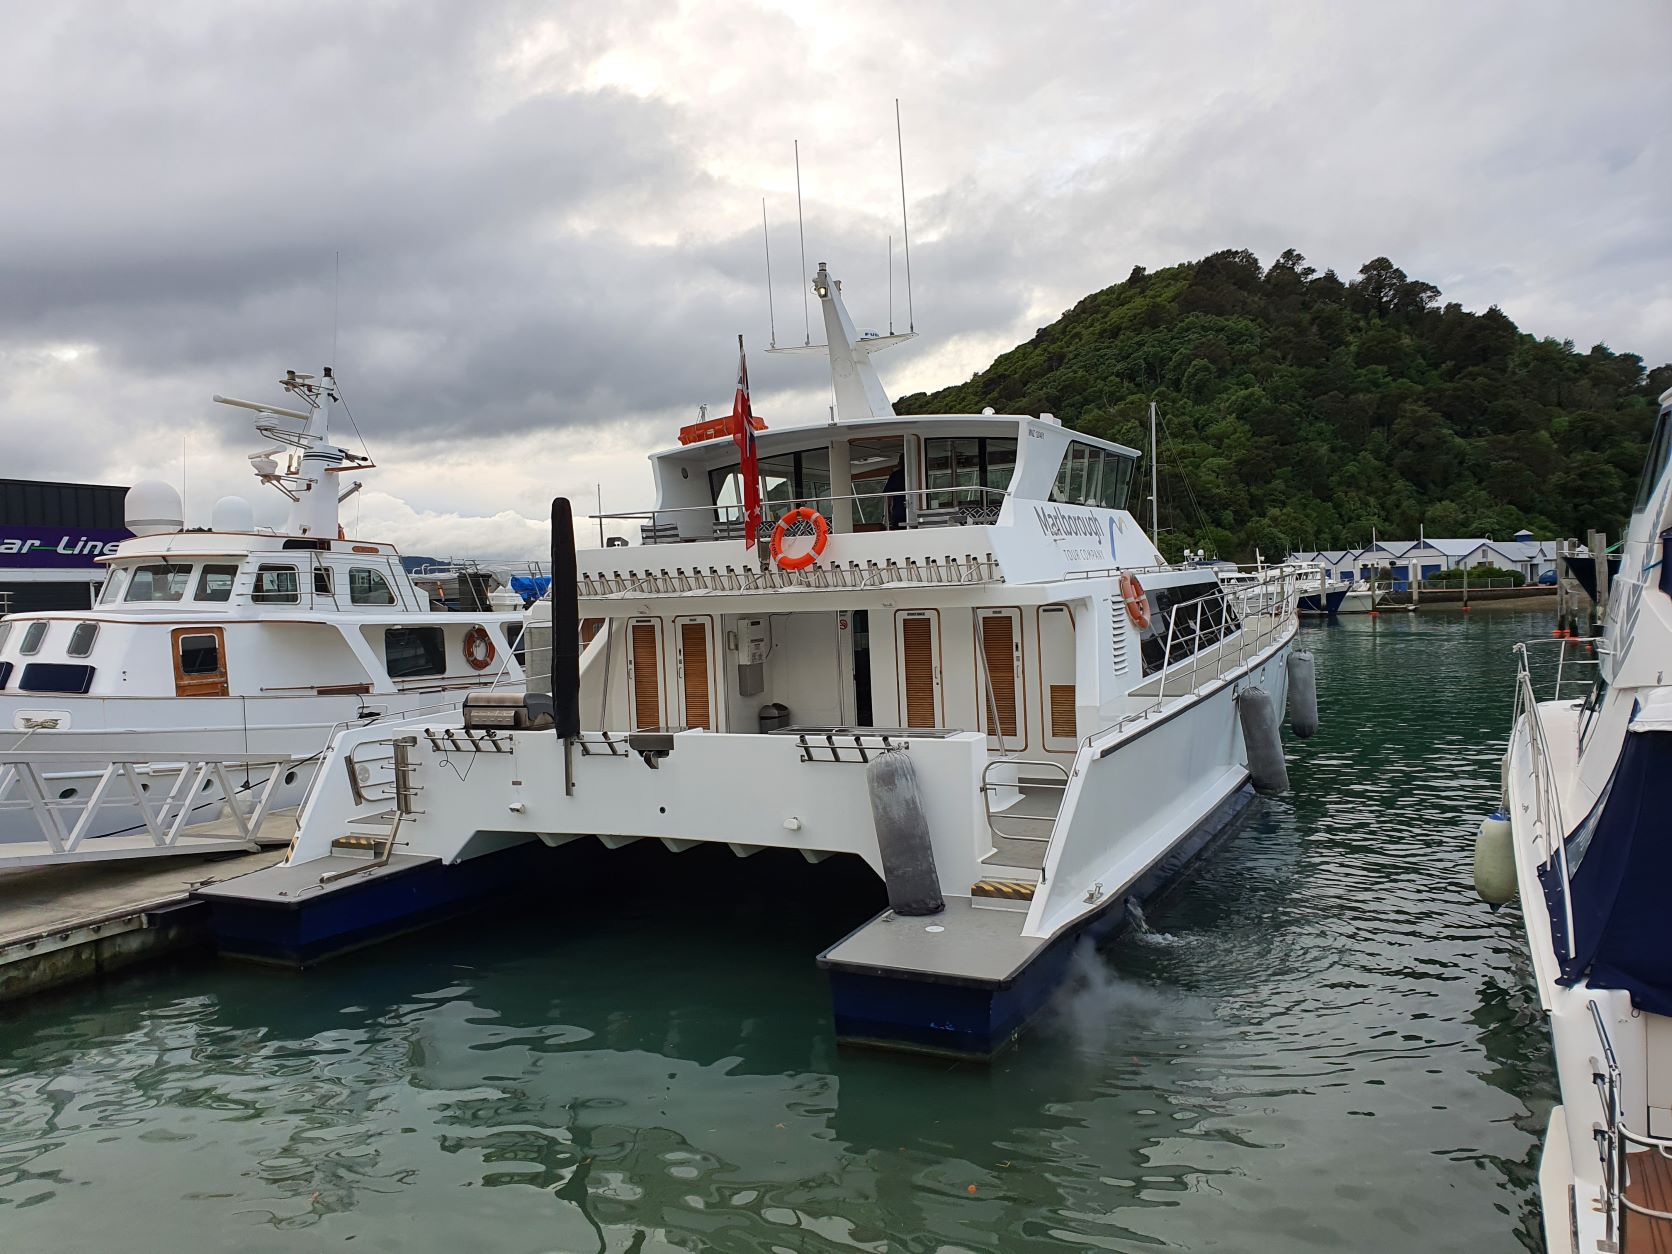 Ferry docked at Picton Marina